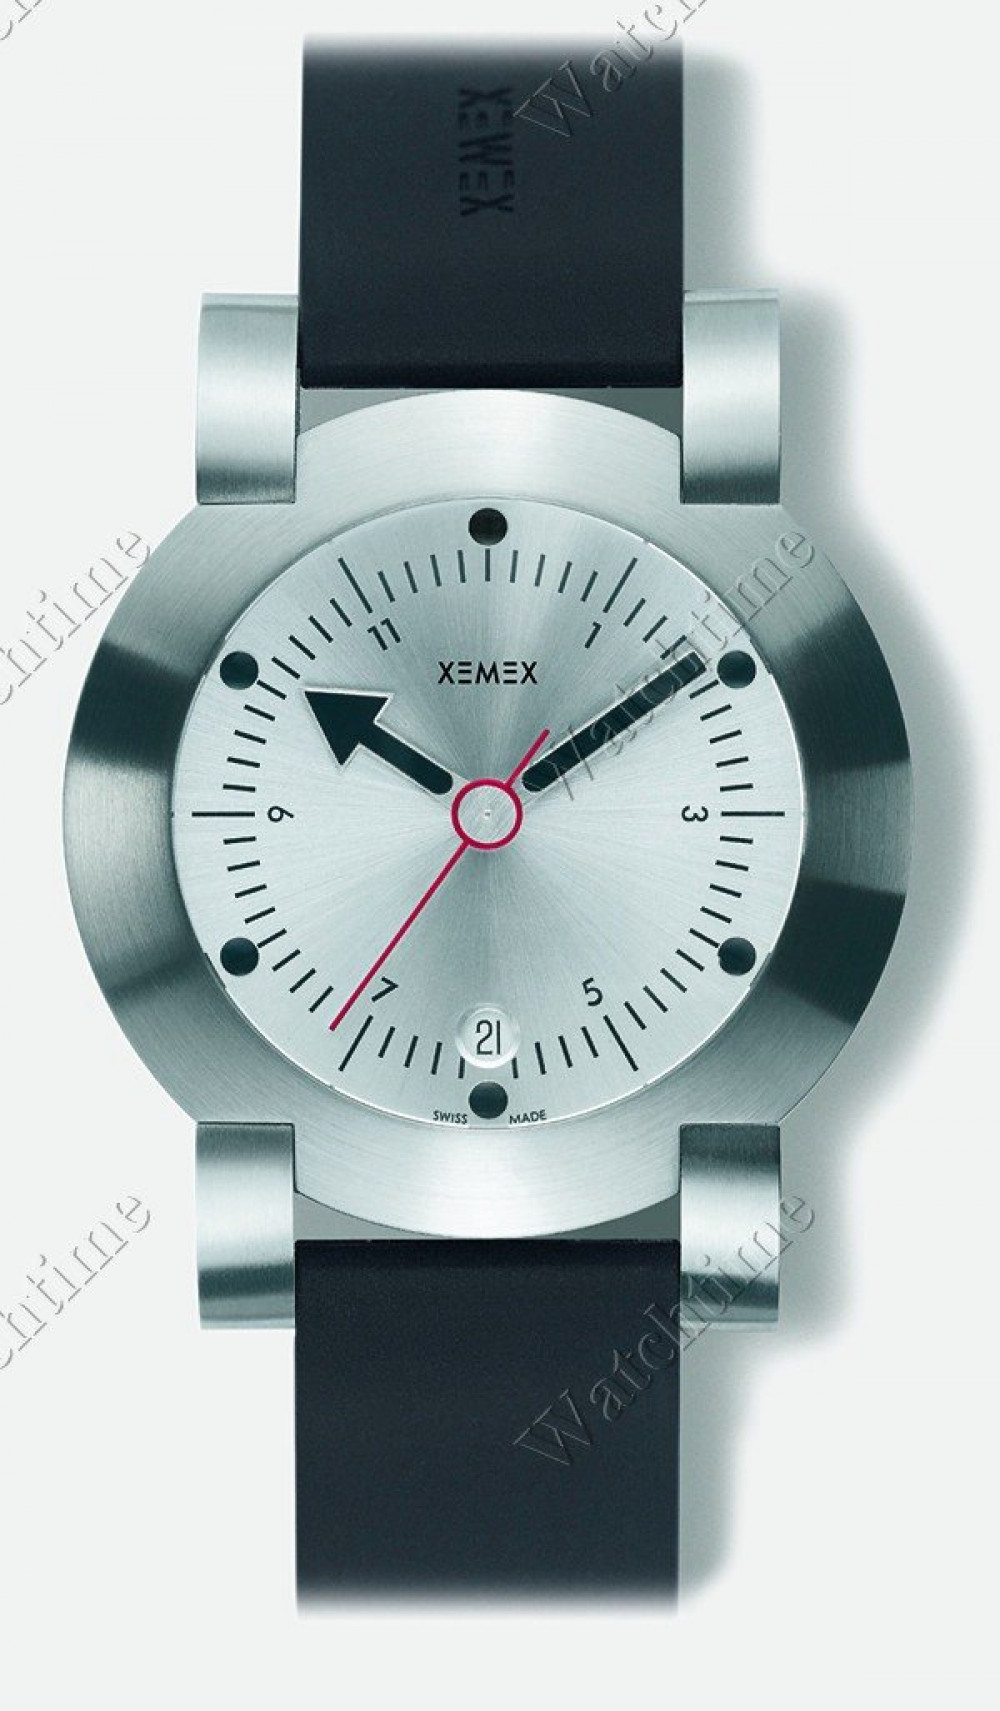 Zegarek firmy Xemex Swiss Watch, model Speedway